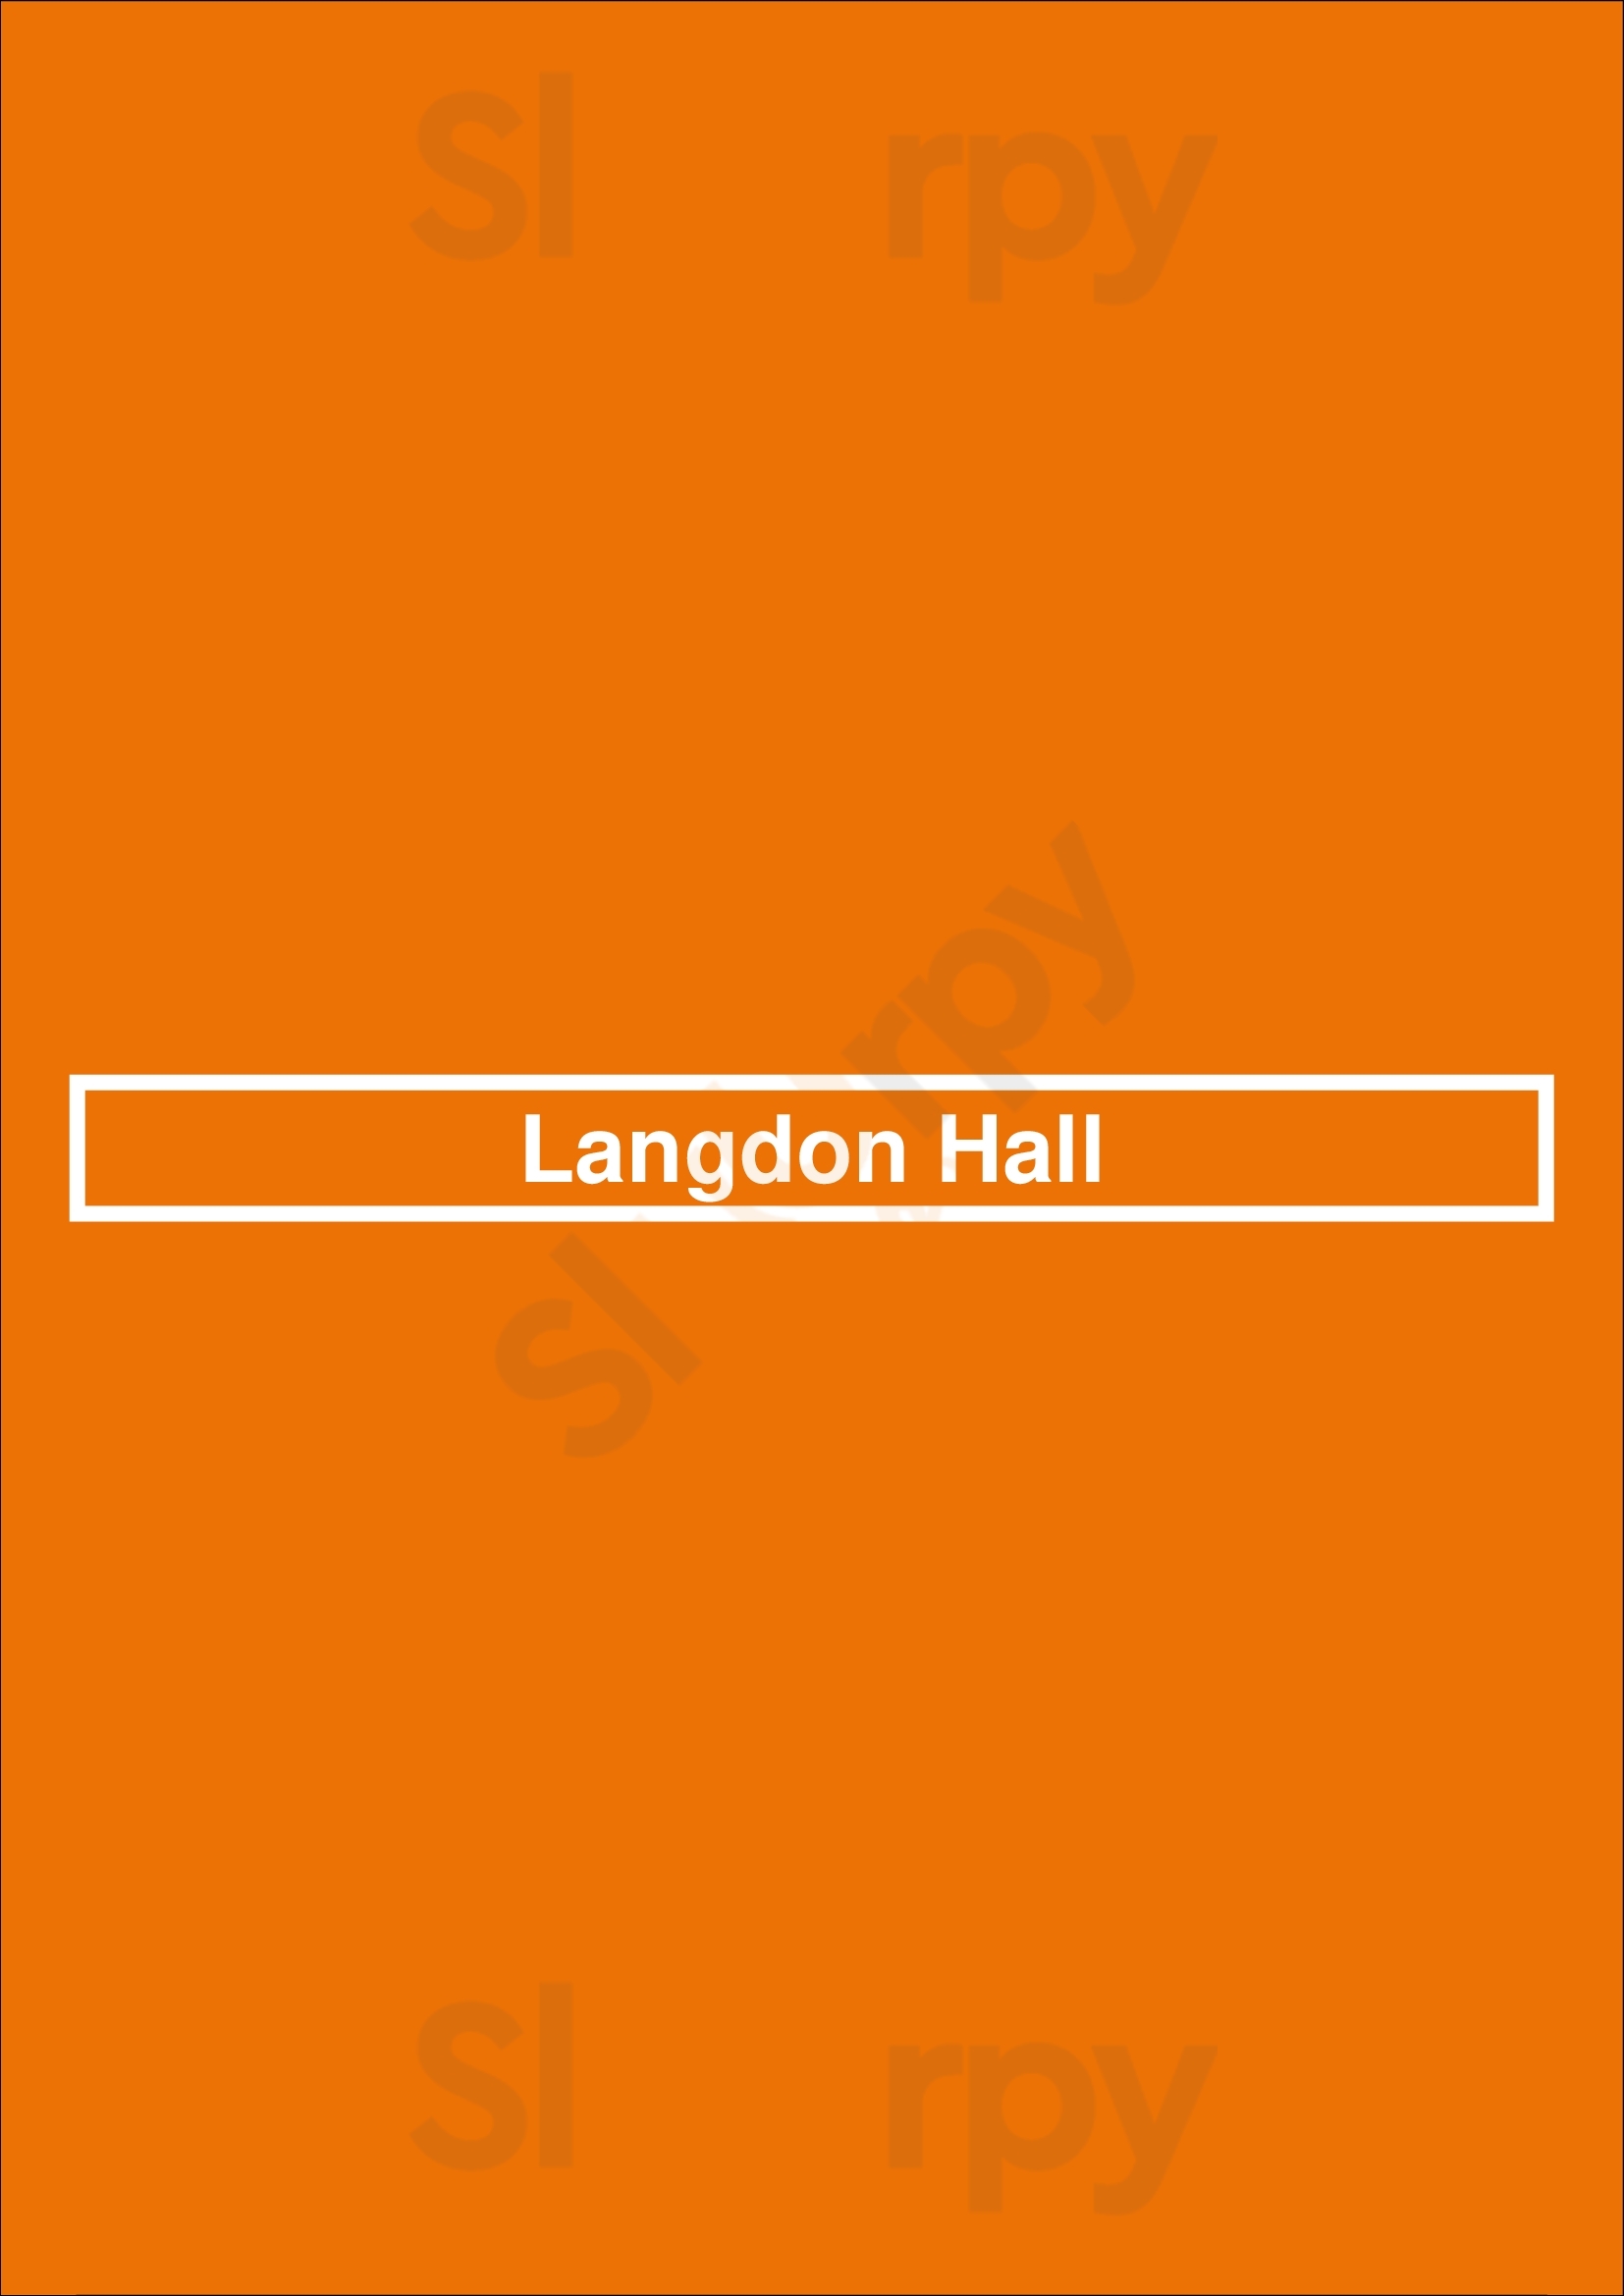 Langdon Hall Restaurant Cambridge Menu - 1